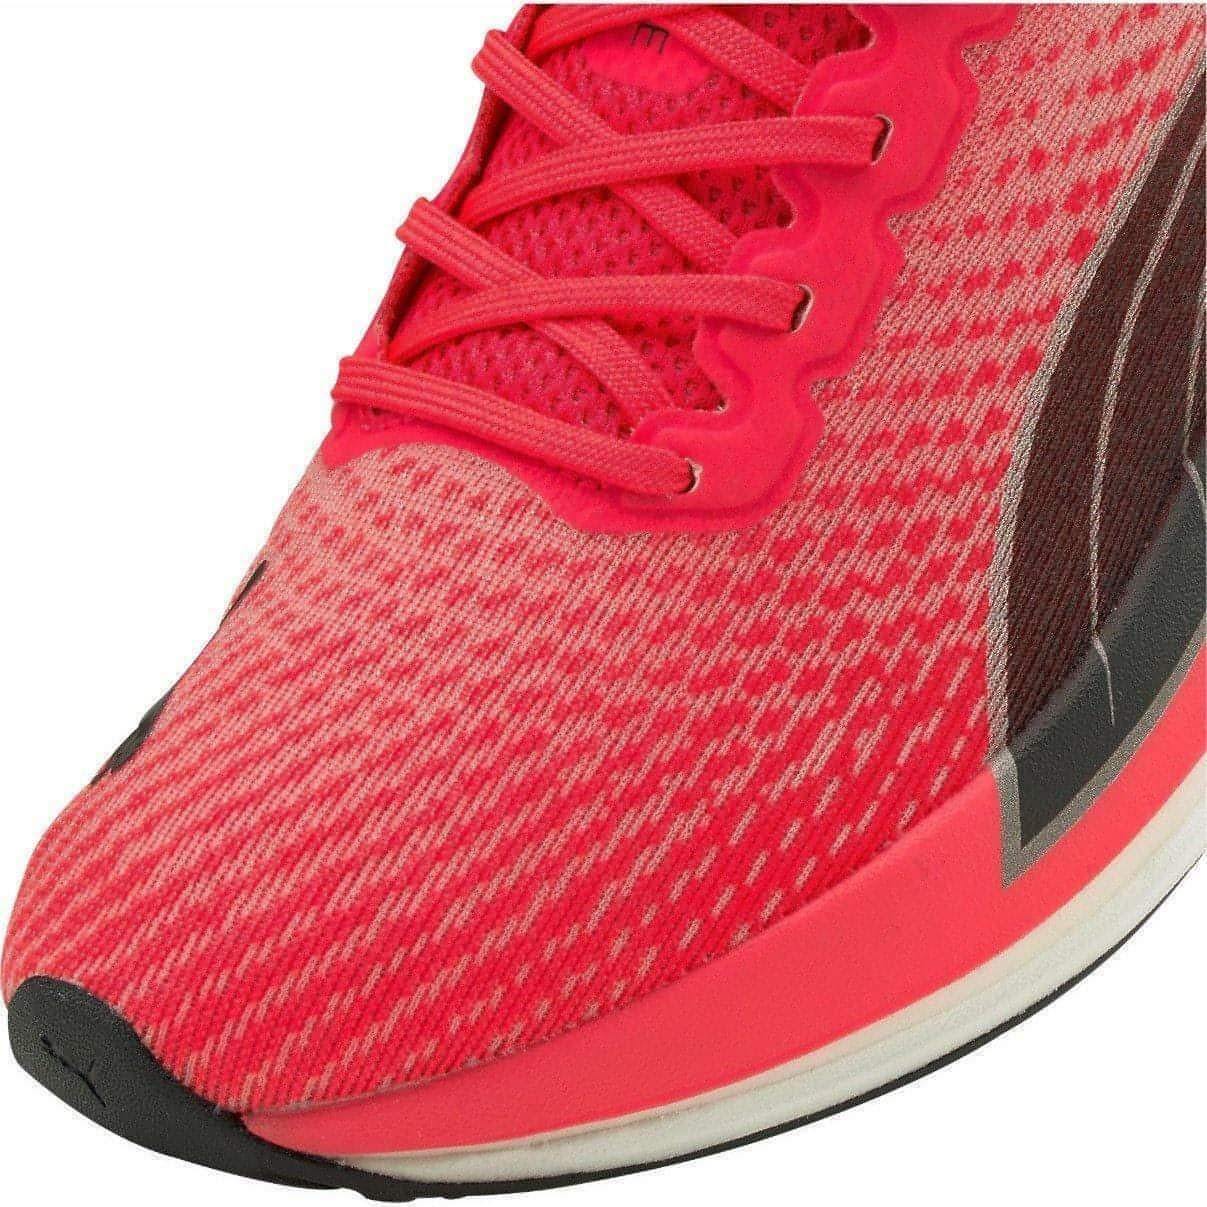 Puma Deviate Nitro Womens Running Shoes - Red - Start Fitness